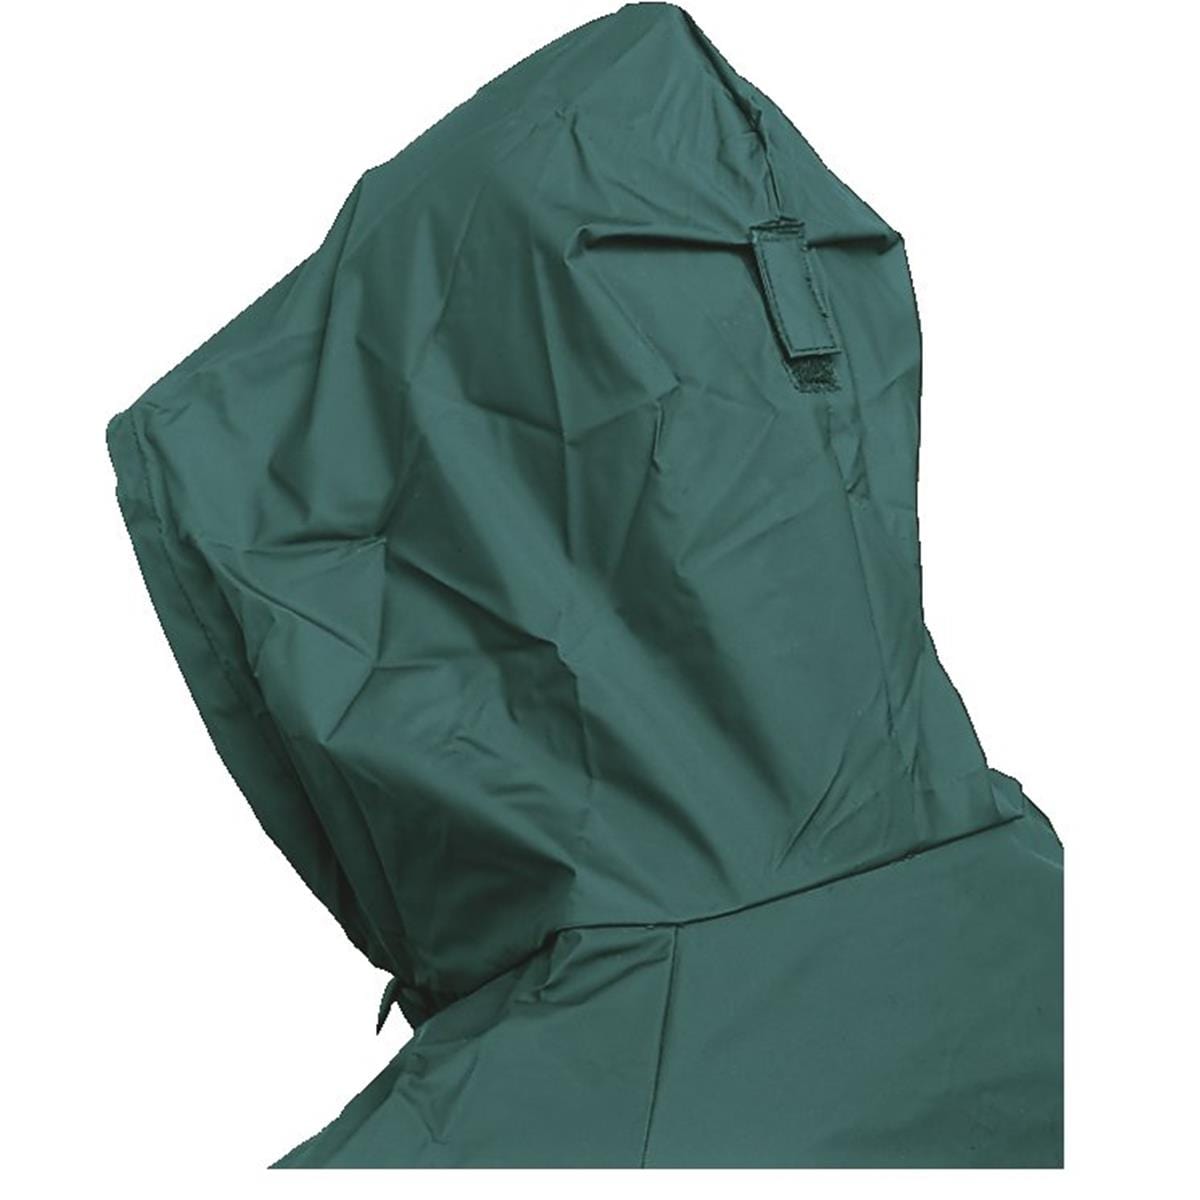 GEMPLER'S Rain Jacket and Pants, PVC-on-Nylon